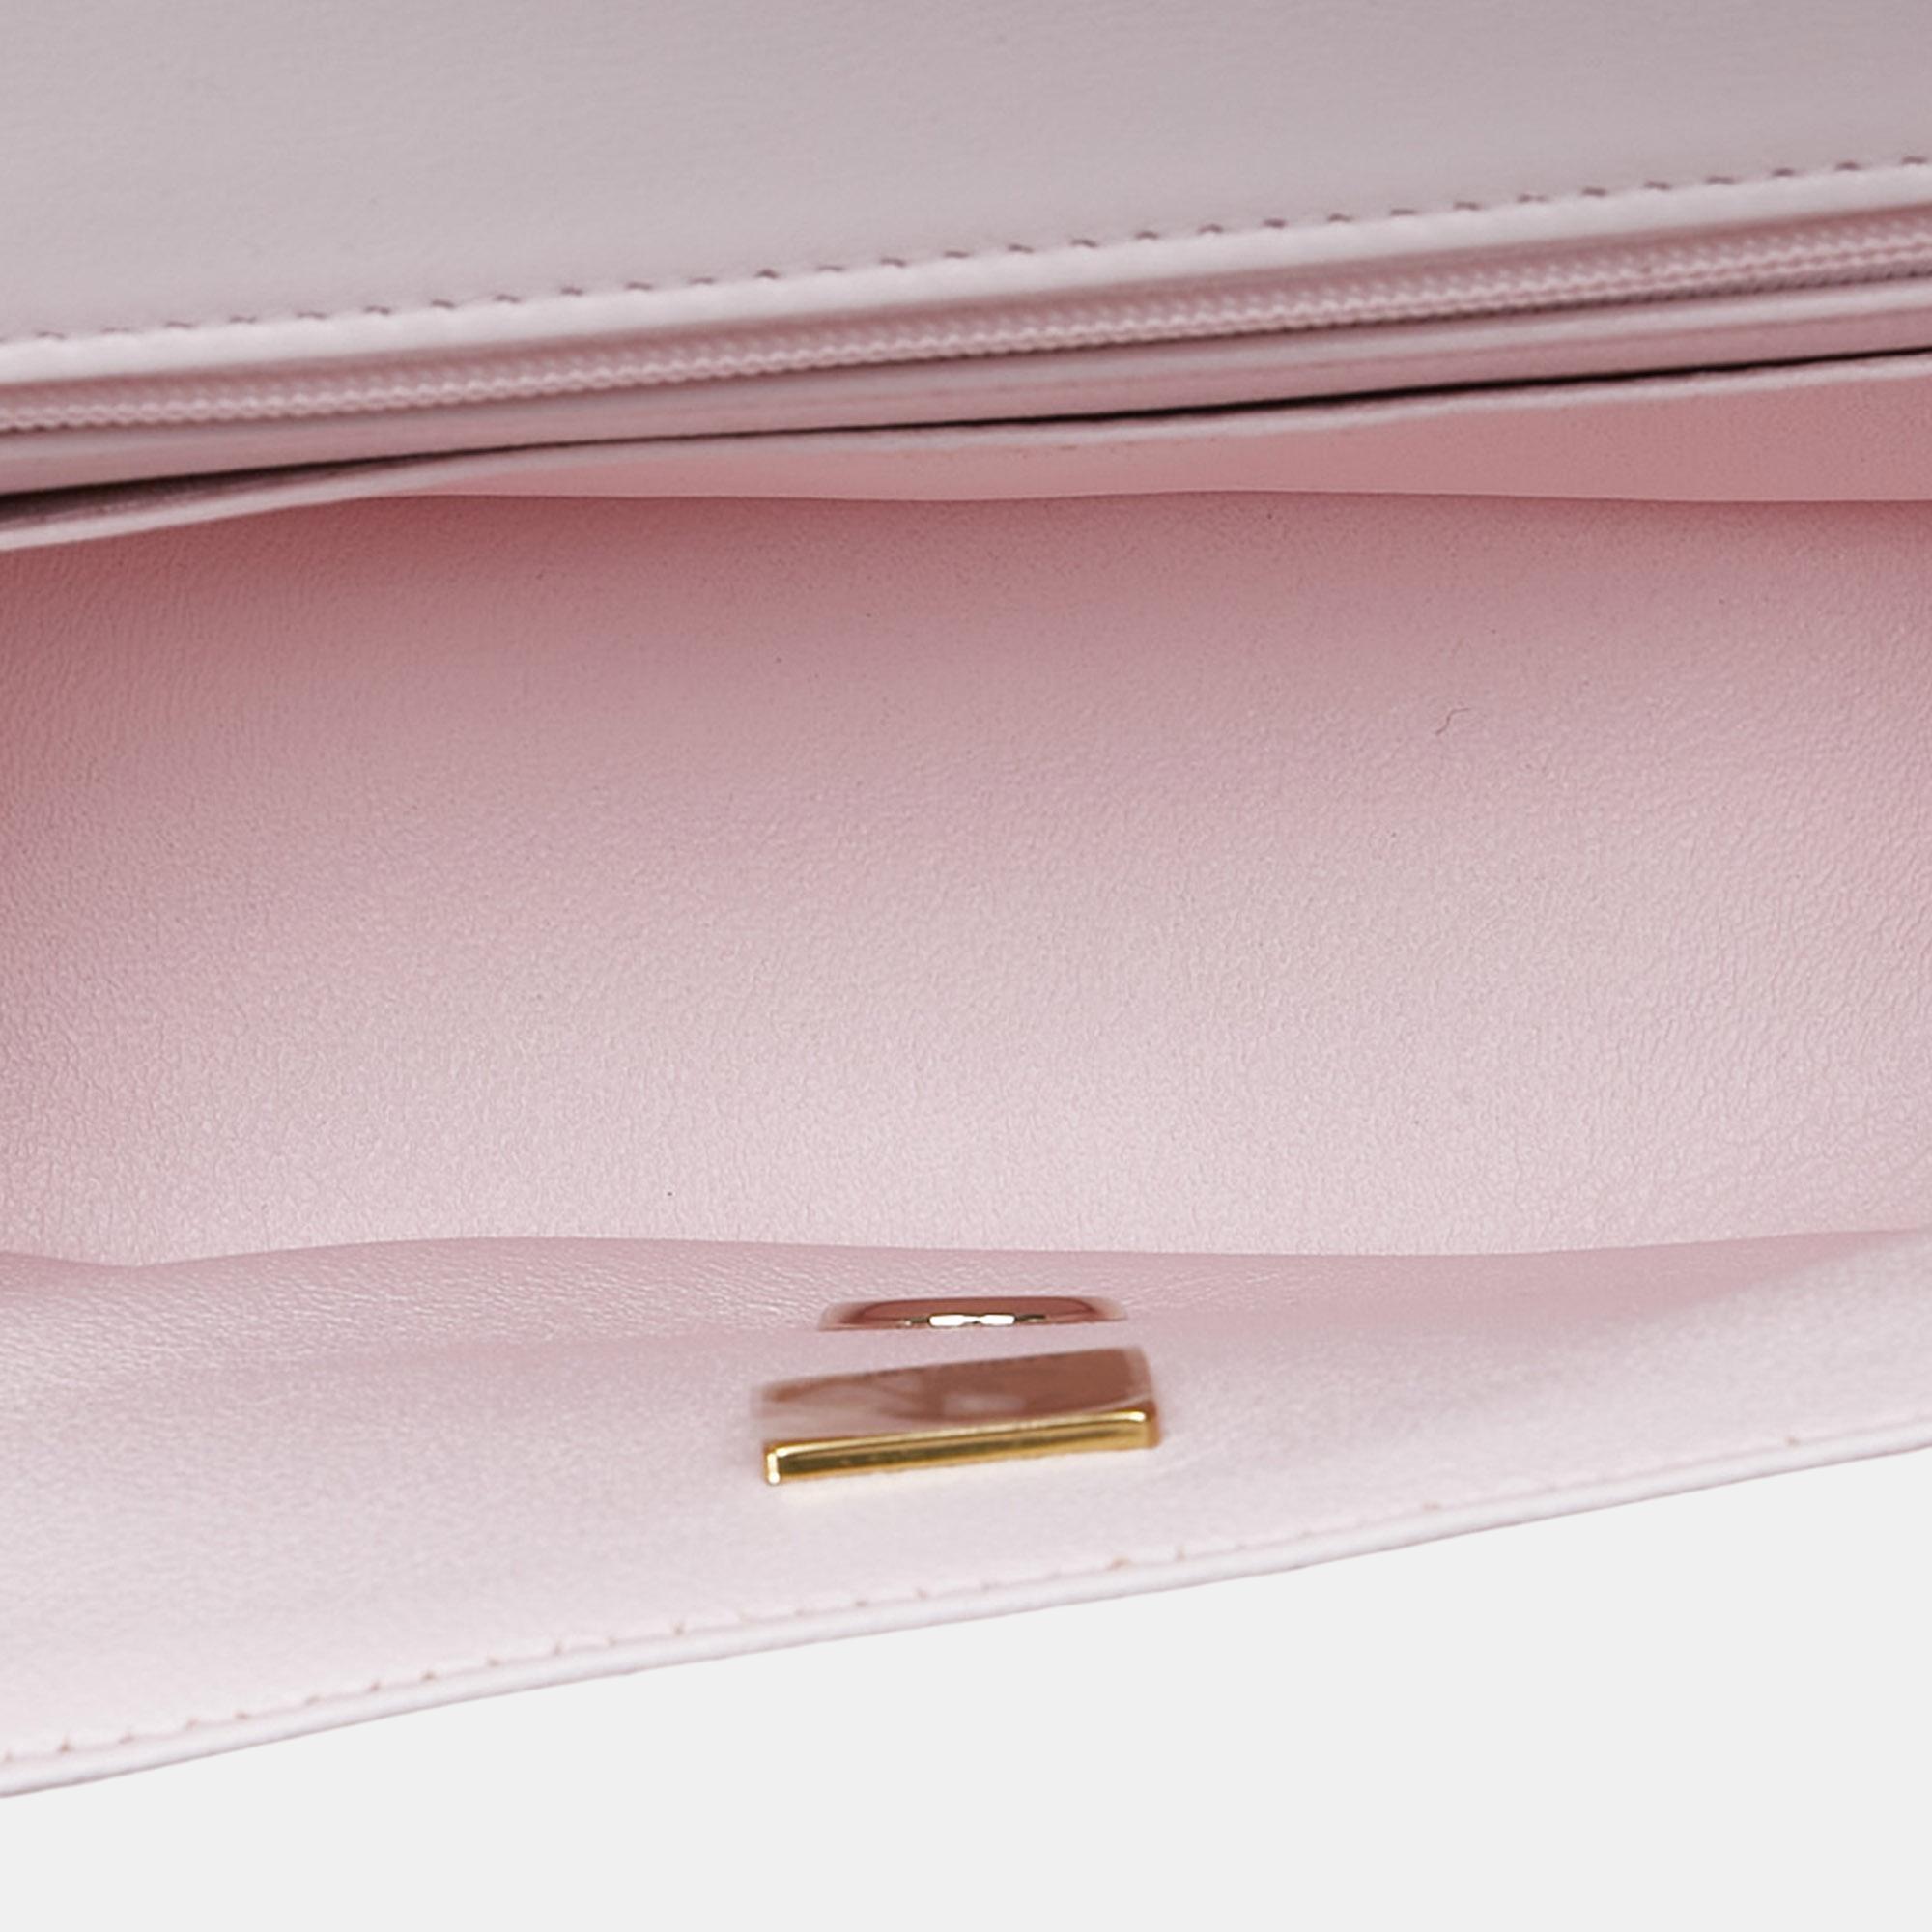 Chanel Pink Mini Top Handle Flap Satchel